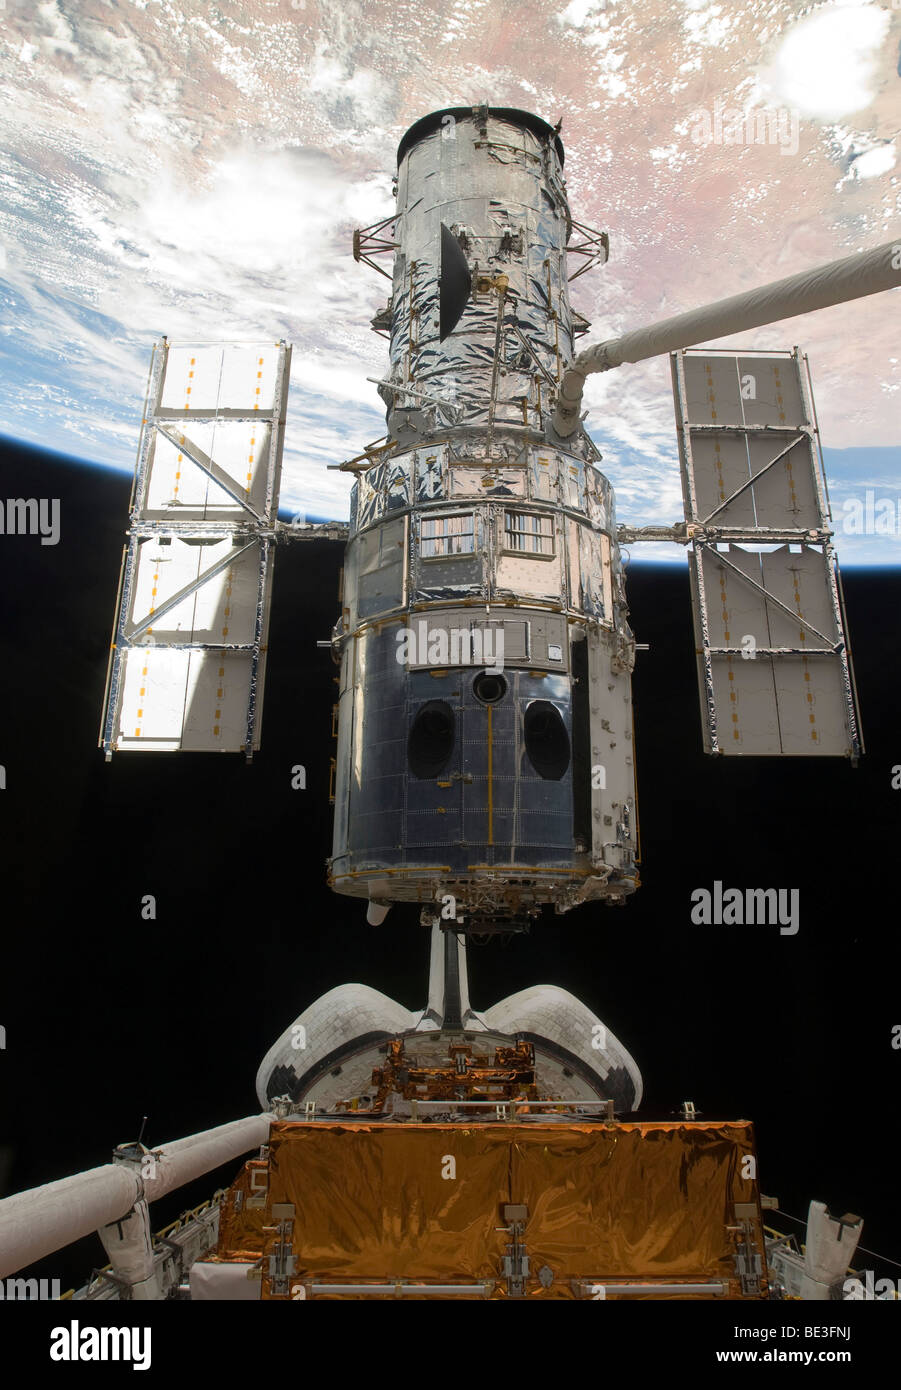 Telescopio hubble fotografías e imágenes de alta resolución - Alamy